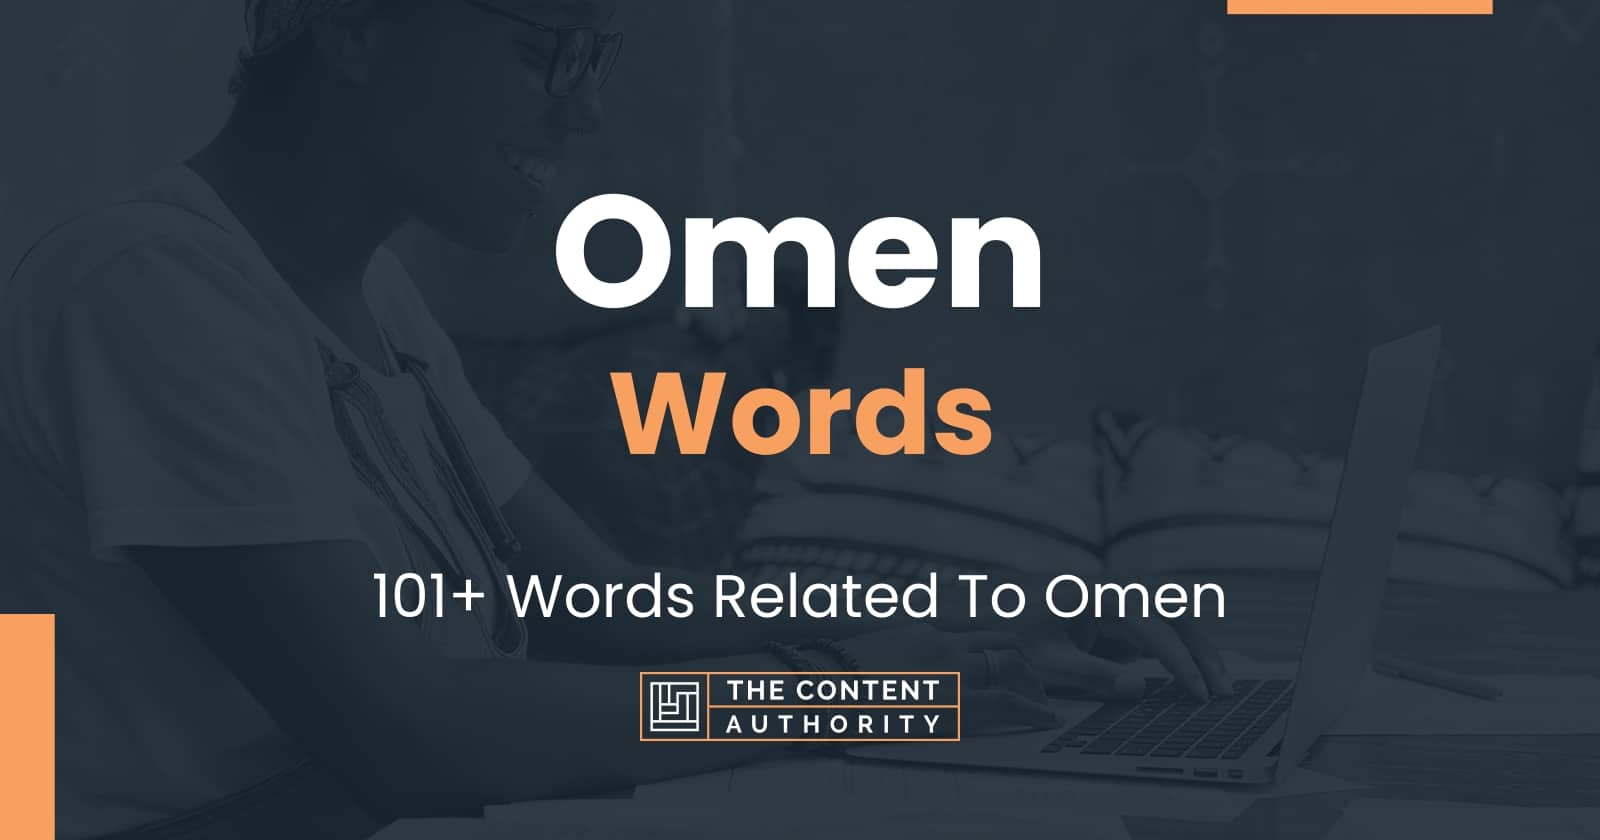 Omen Words - 101+ Words Related To Omen